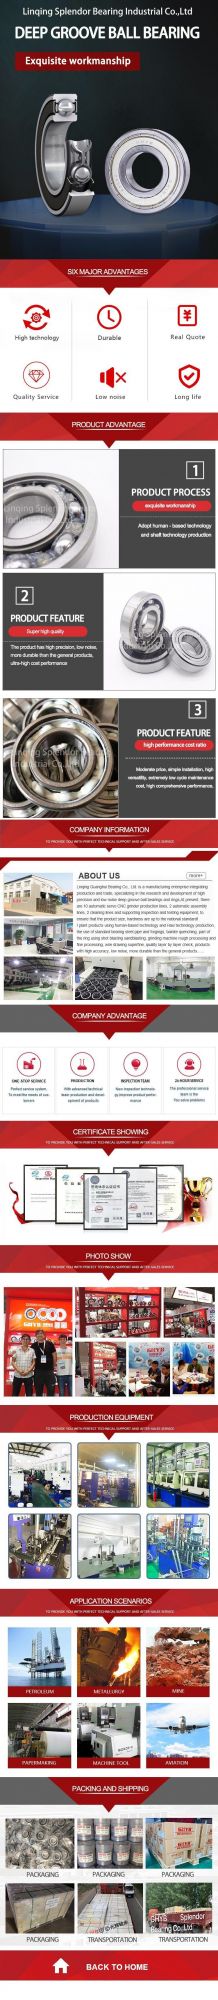 China Factory Distributor Supplier of Deep Groove Ball Bearings for Motors, Compressors, Alternators 6209-2rz/P6/Z2V2